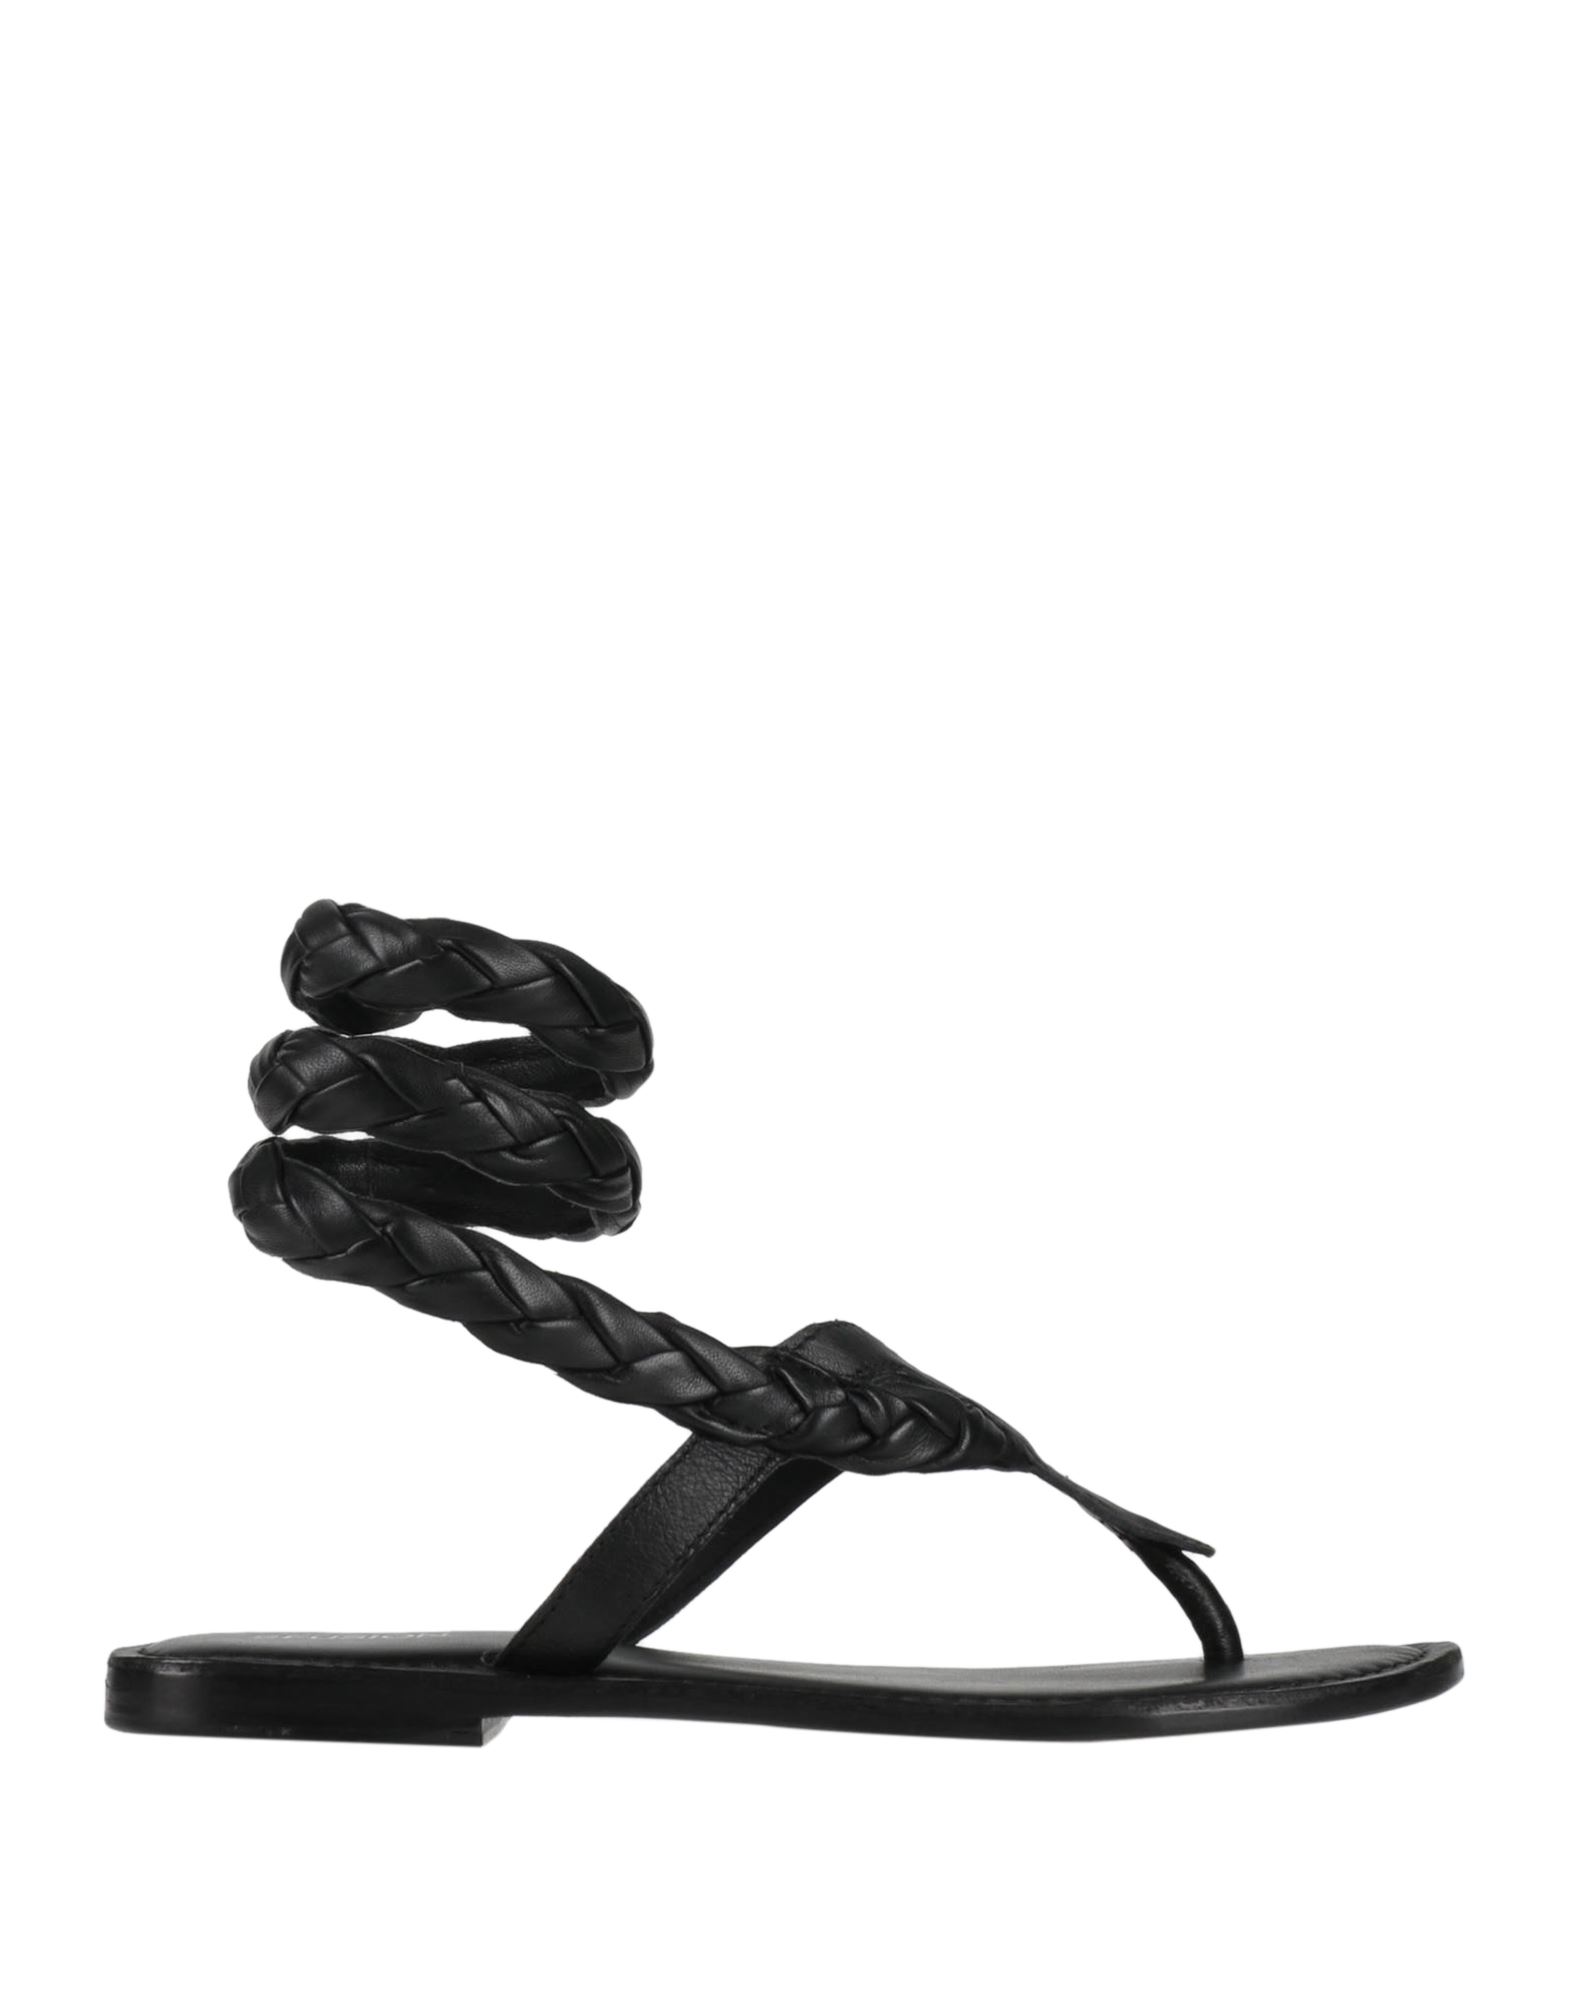 Cb Fusion Woman Toe Strap Sandals Black Size 10 Soft Leather